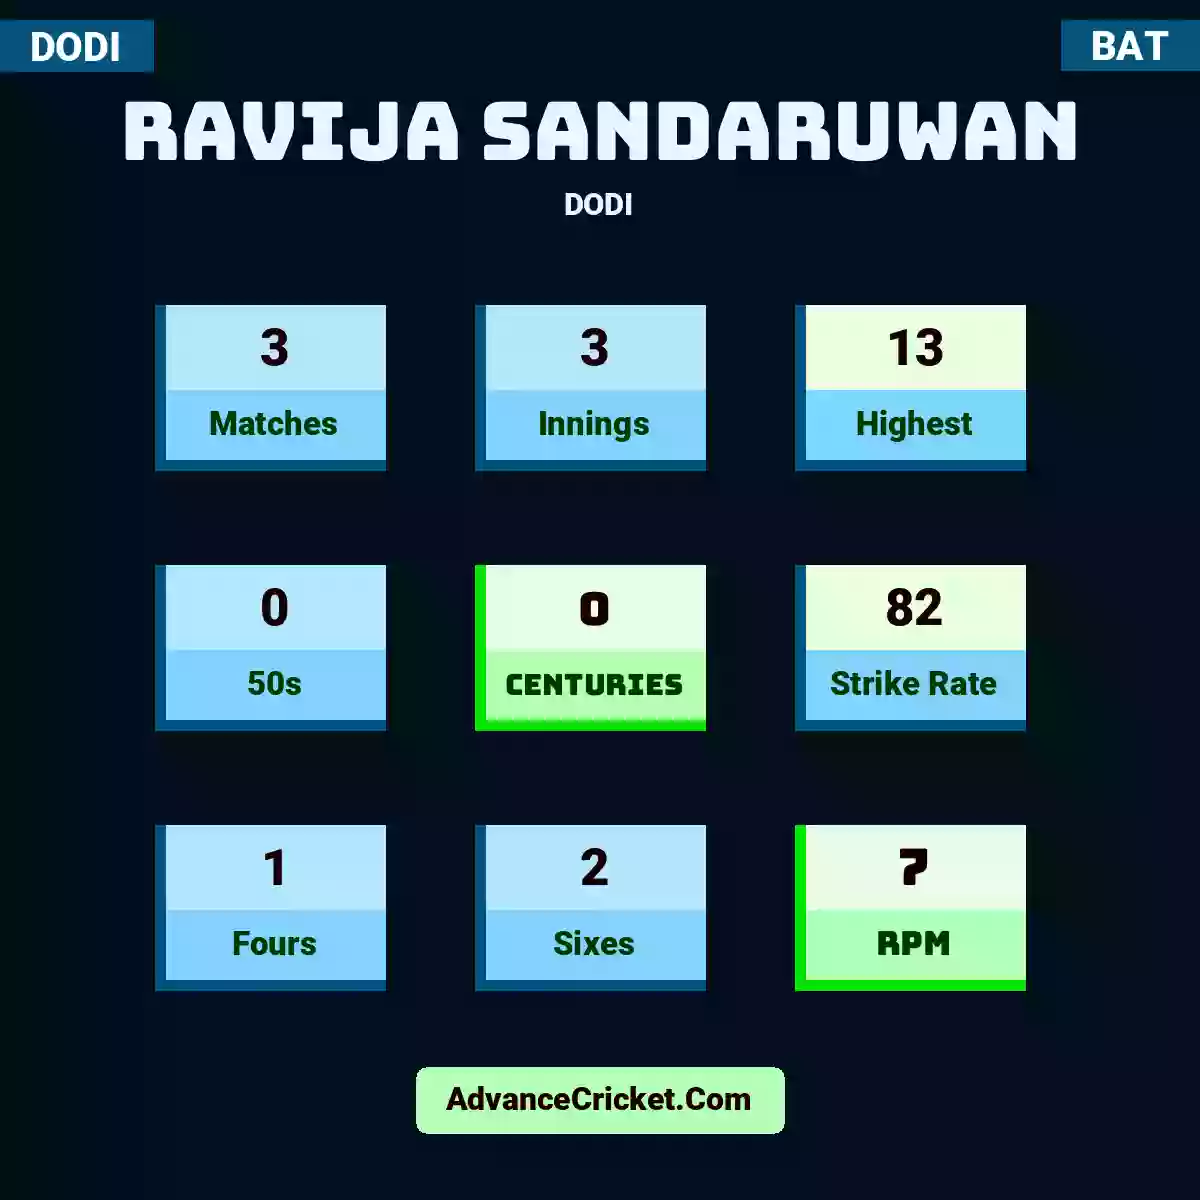 Ravija Sandaruwan DODI , Ravija Sandaruwan played 3 matches, scored 13 runs as highest, 0 half-centuries, and 0 centuries, with a strike rate of 82. R.Sandaruwan hit 1 fours and 2 sixes, with an RPM of 7.